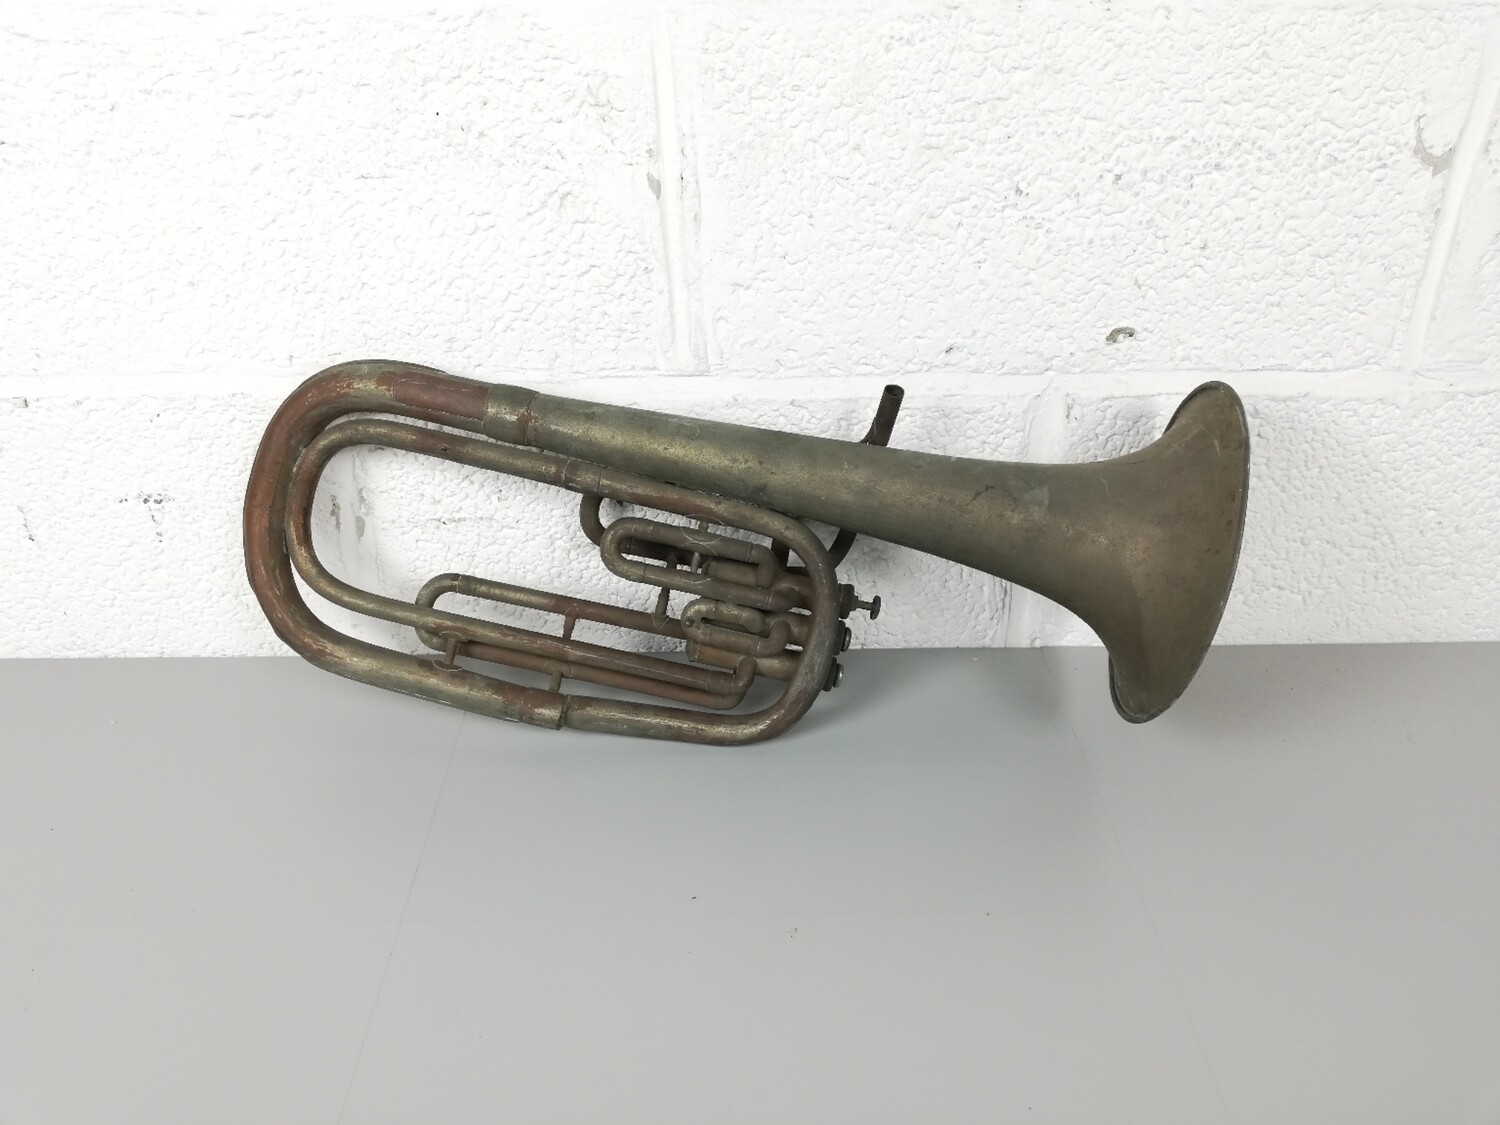 Old alto horn